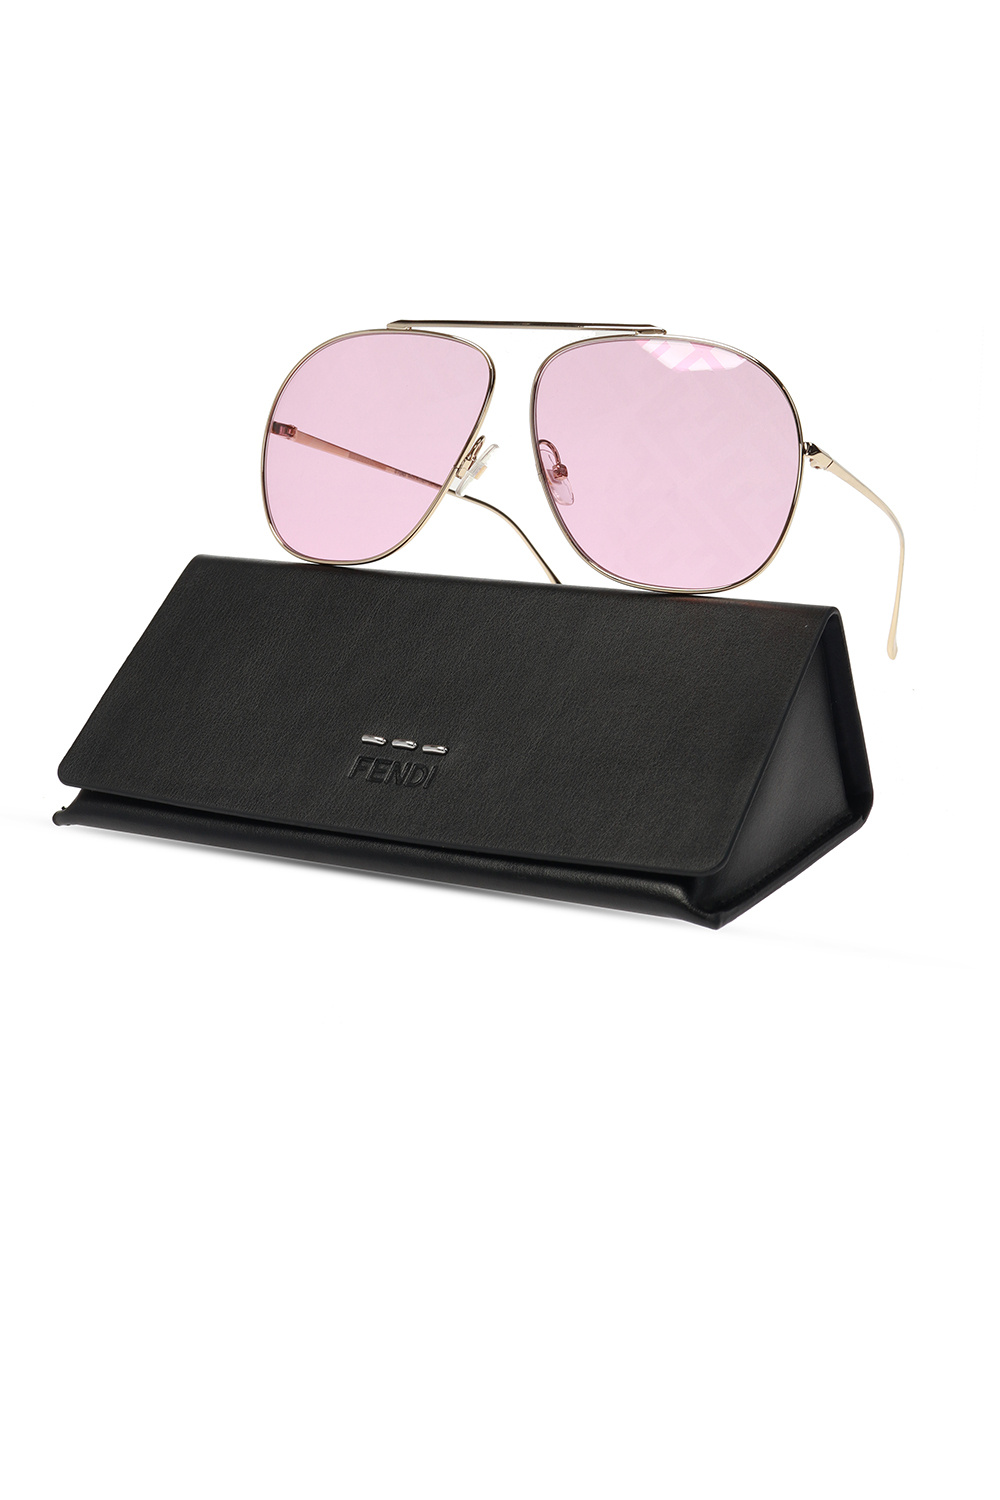 Fendi WD00044-A sunglasses with logo